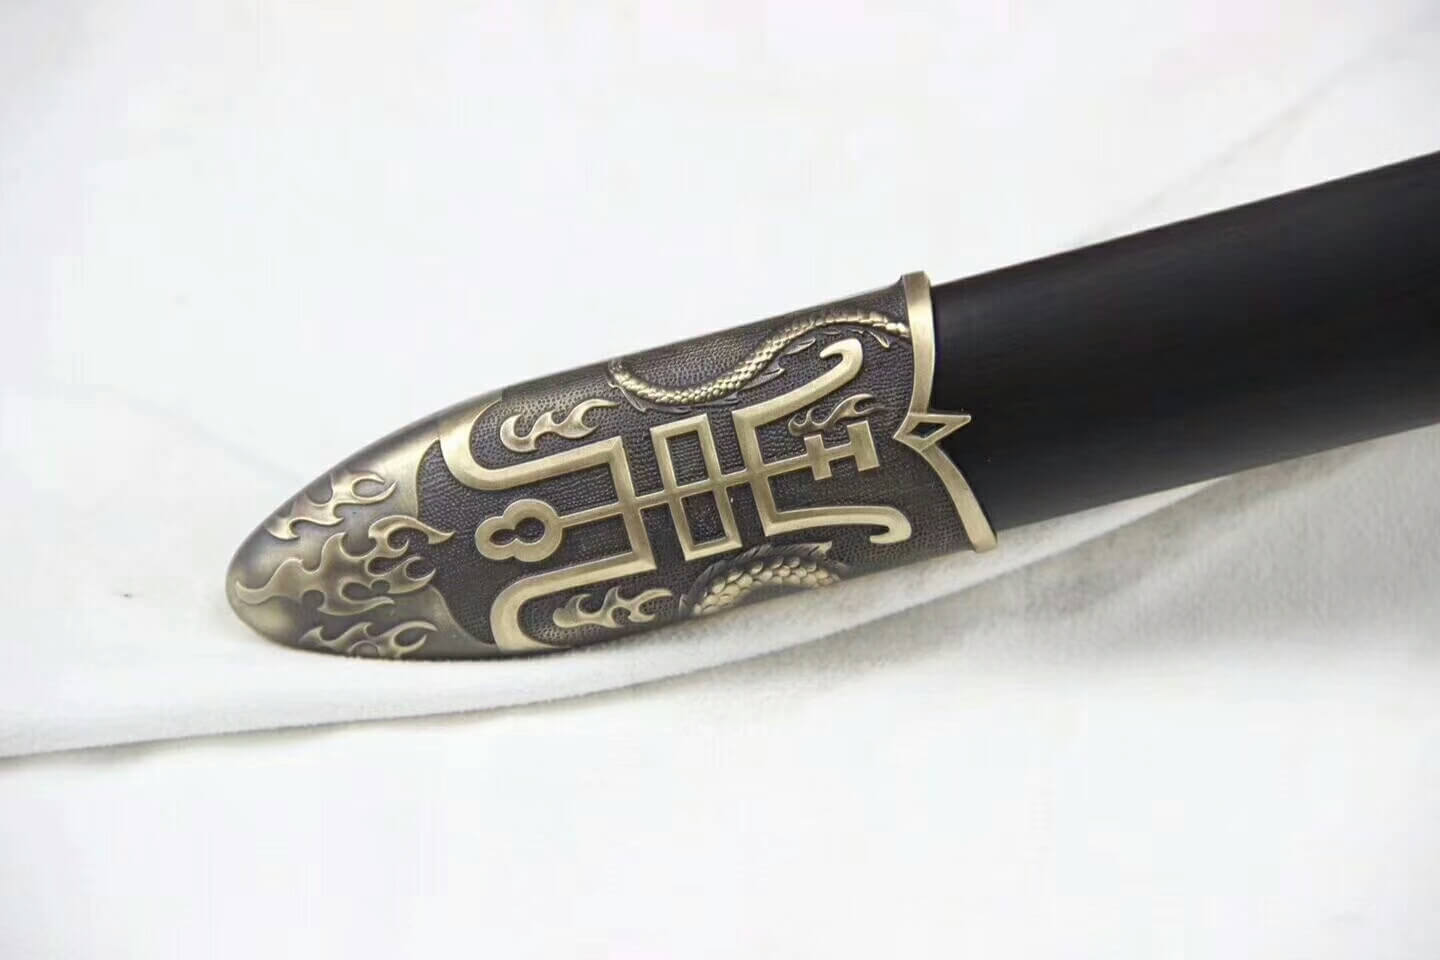 Fire sword,Damascus steel blade,Brass fittings,Ebony scabbard - Chinese sword shop